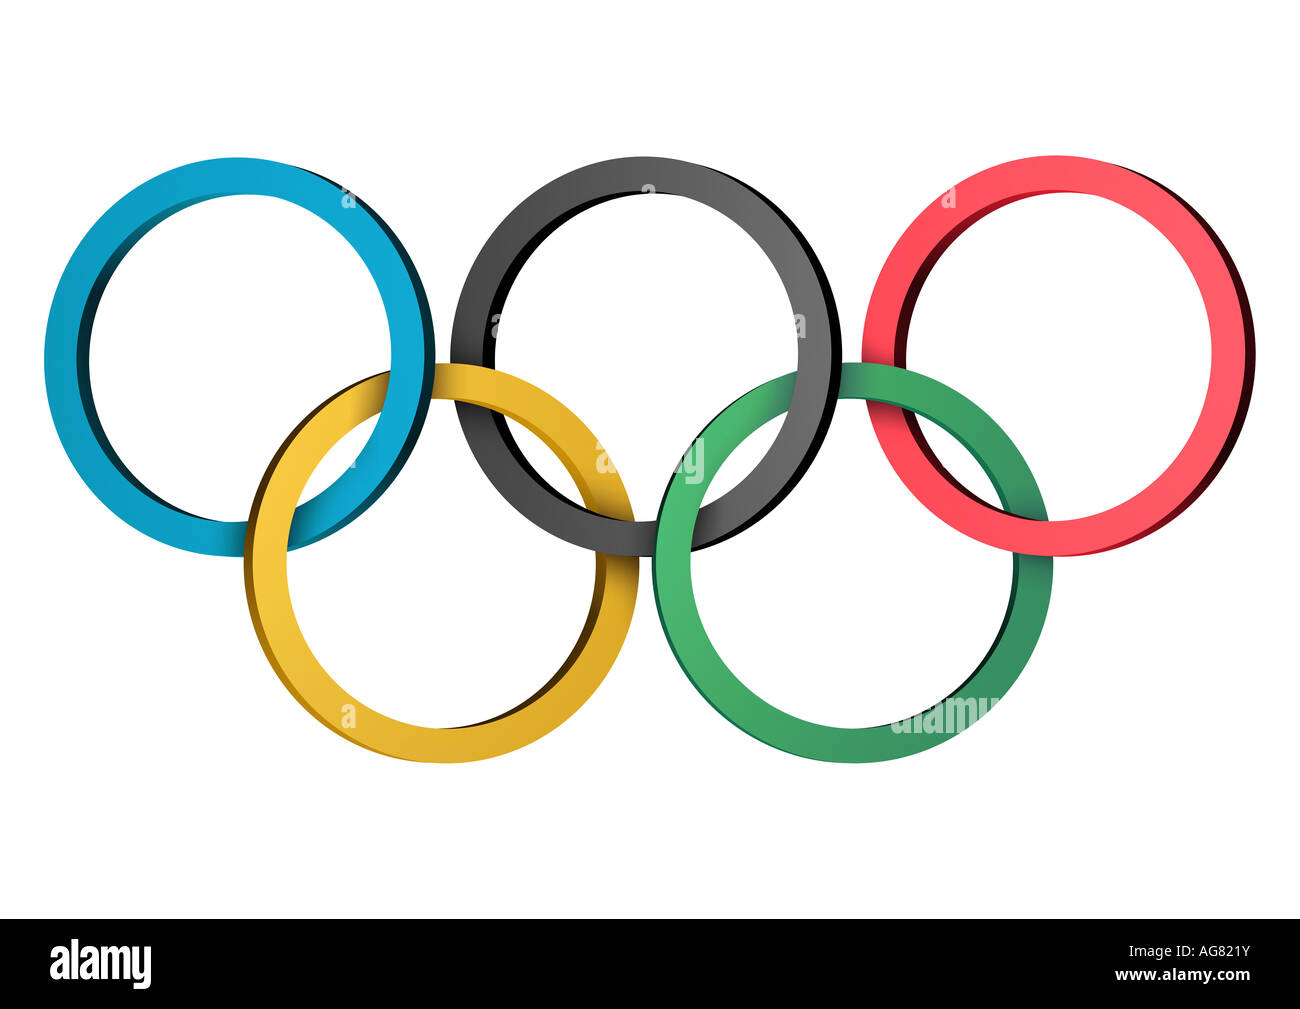 Olympische ringe olympia -Fotos und -Bildmaterial in hoher Auflösung – Alamy